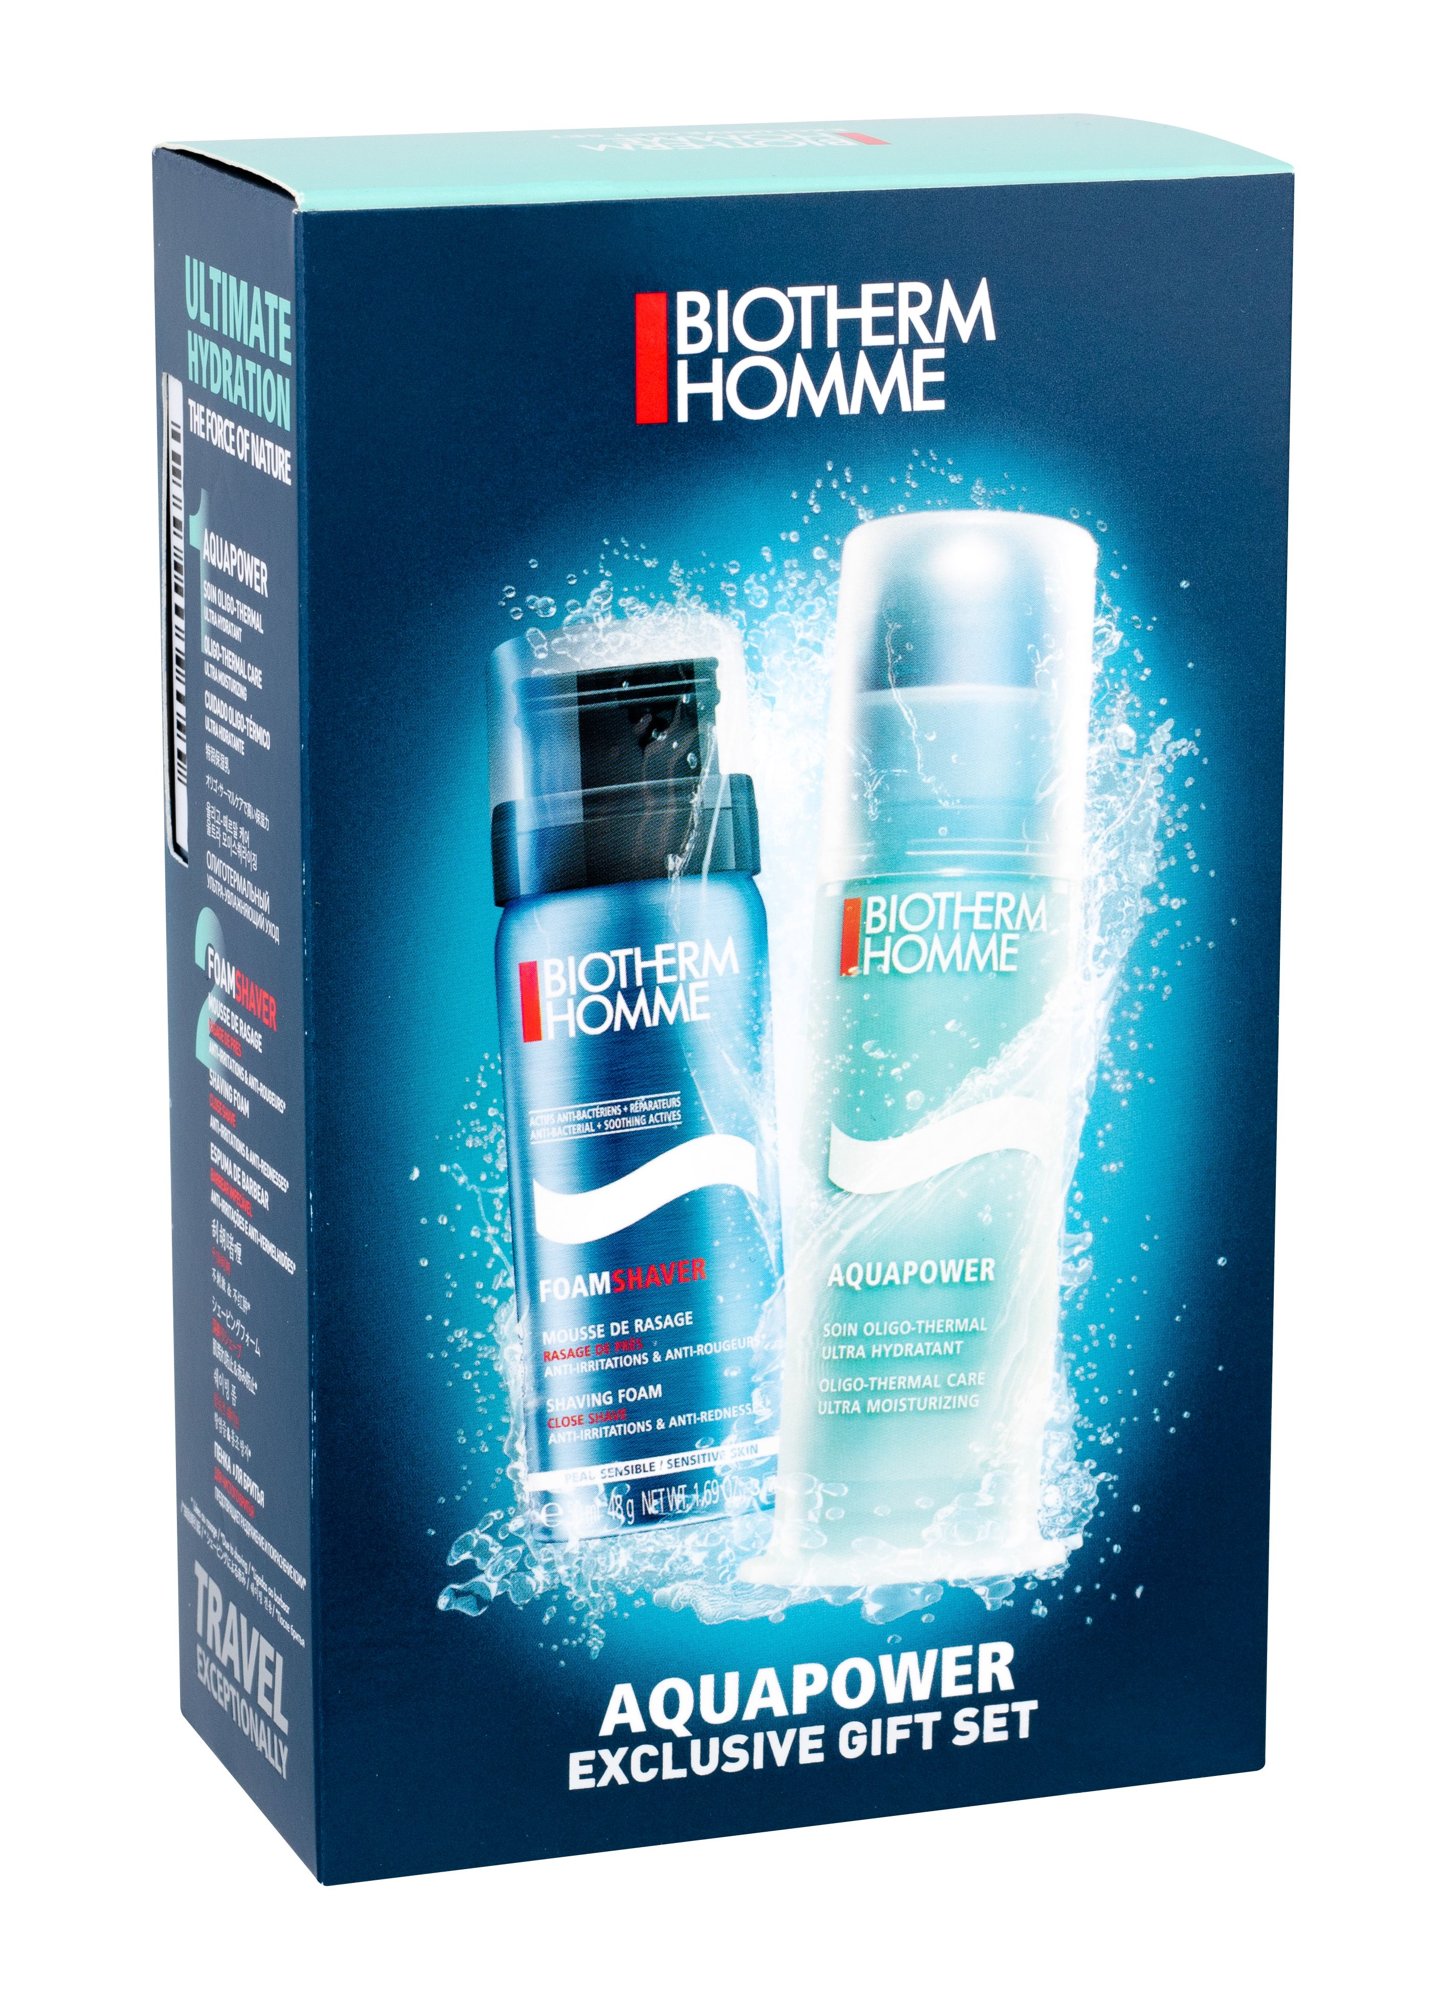 Biotherm Homme Aquapower Oligo Thermal Care 75ml Daily skin care 75 ml + Foam Shaver 50 ml veido gelis Rinkinys